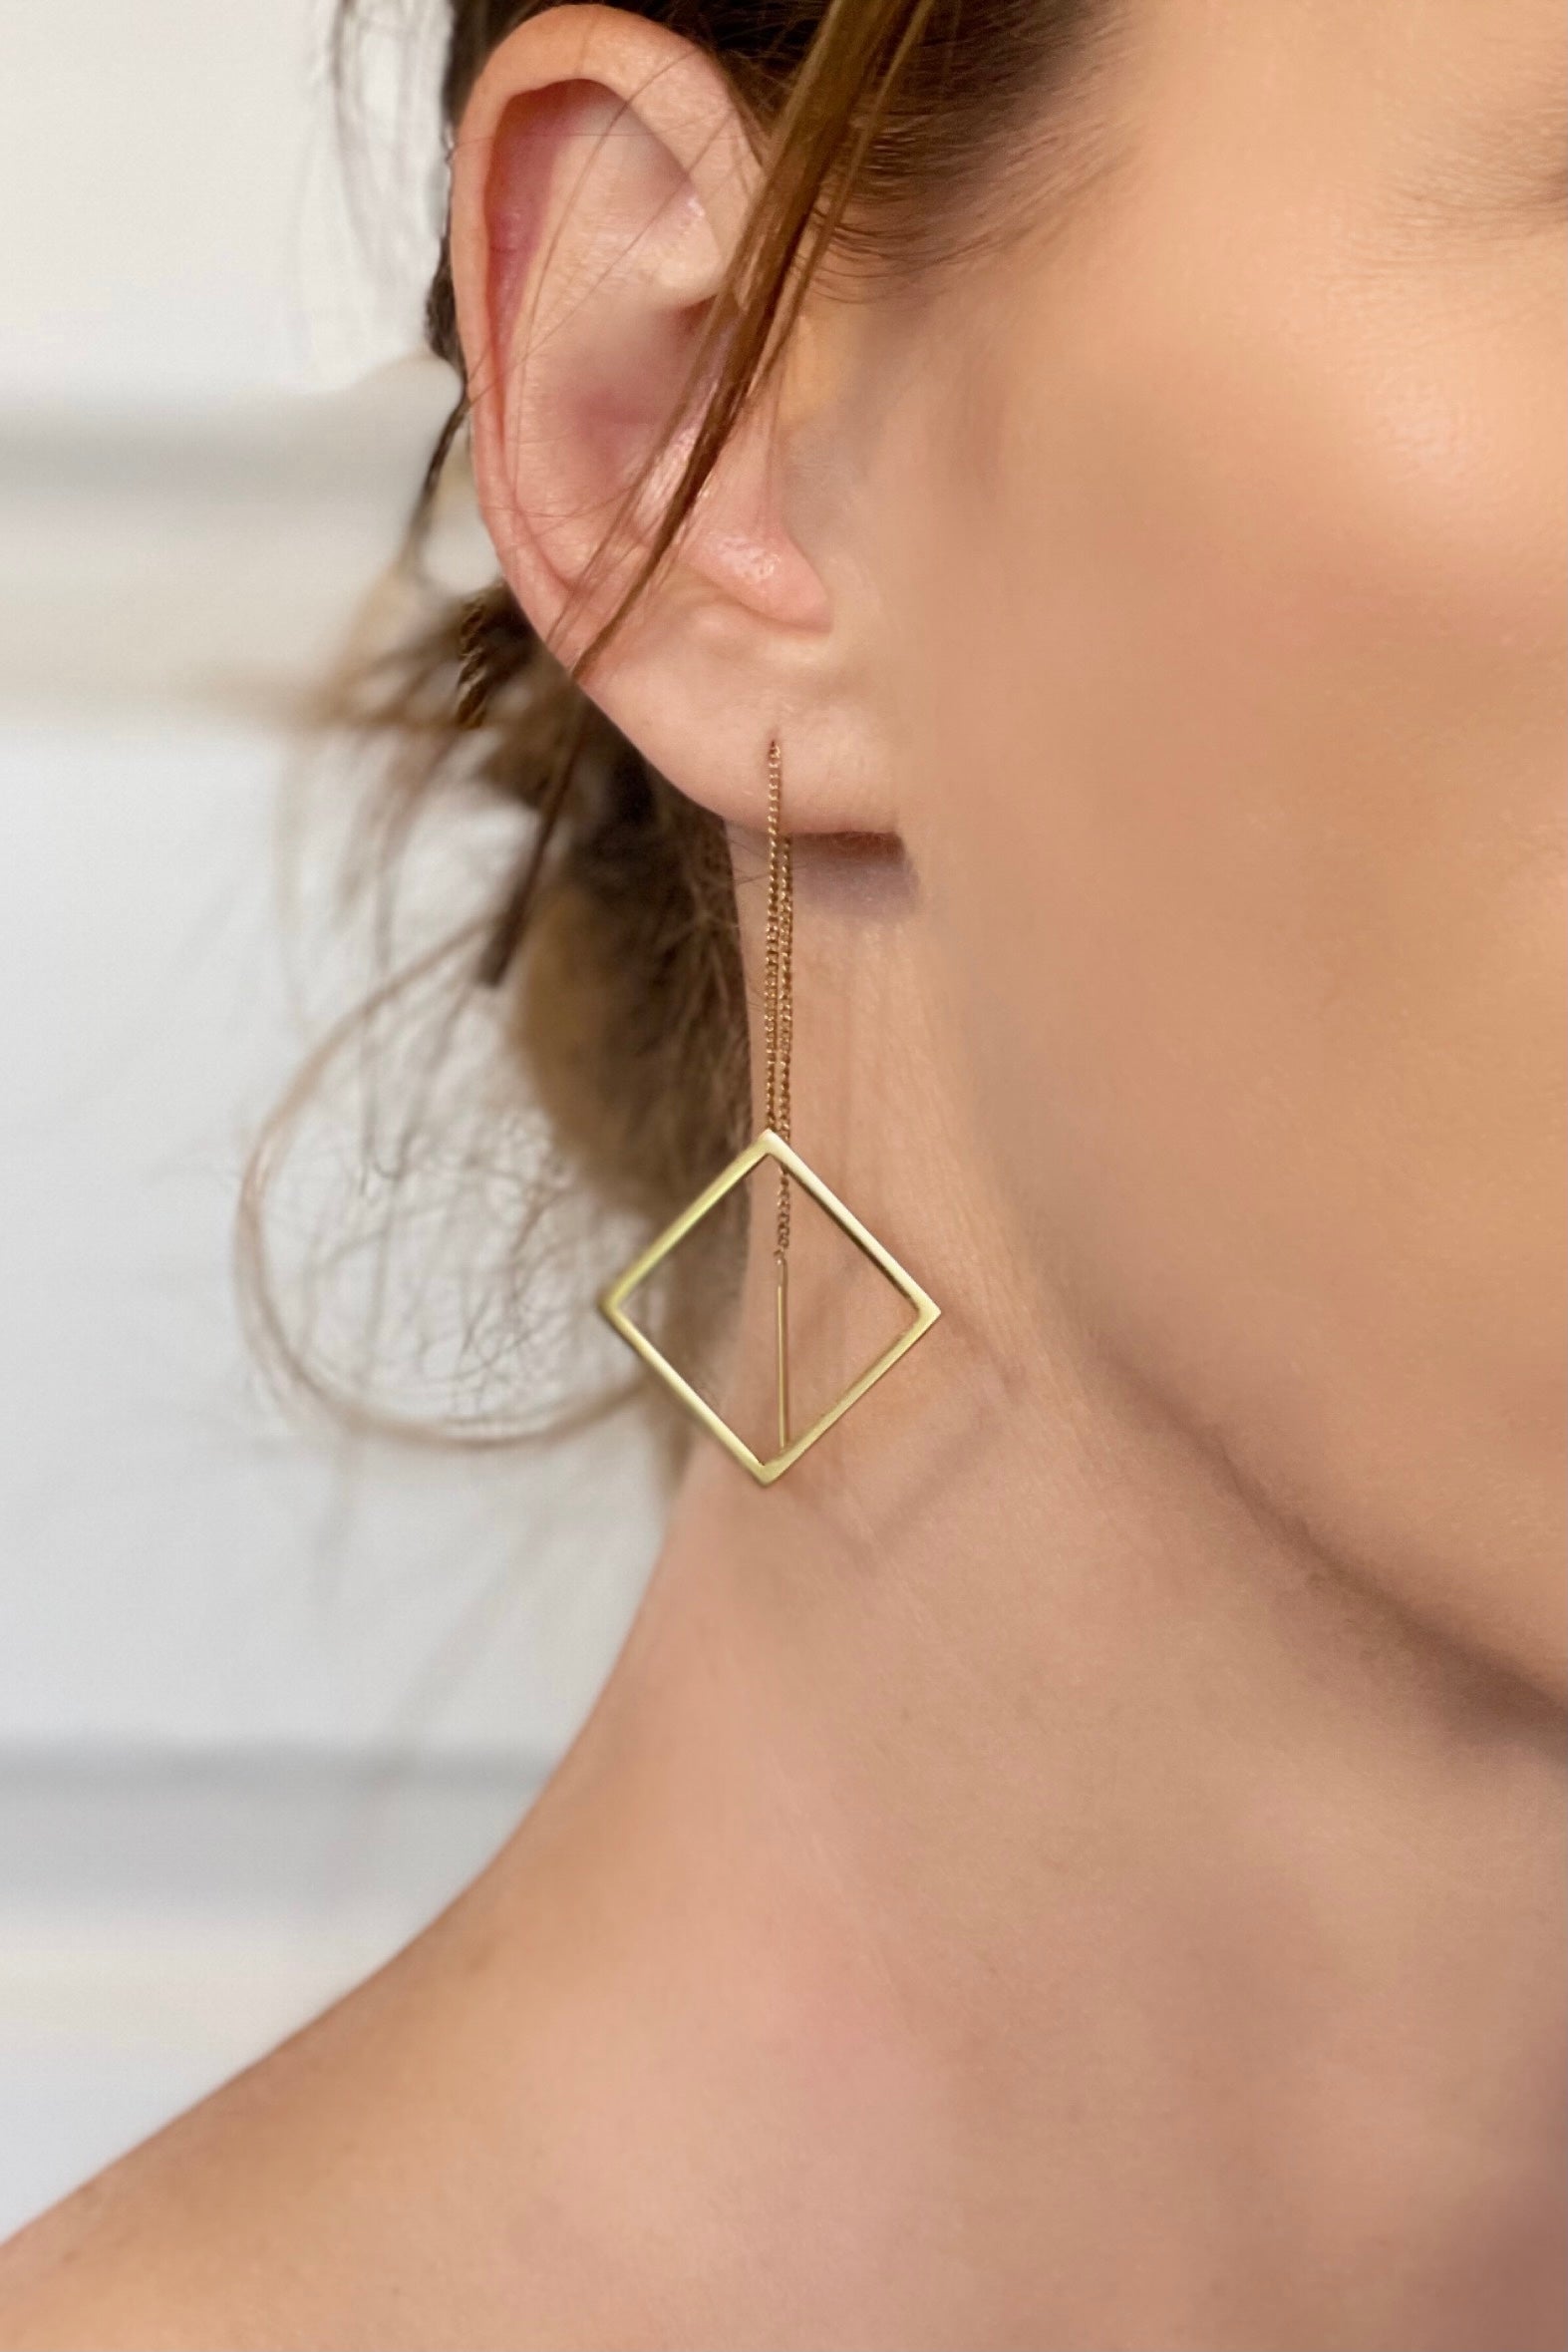 Geometric Threader Earrings - All Sales Final